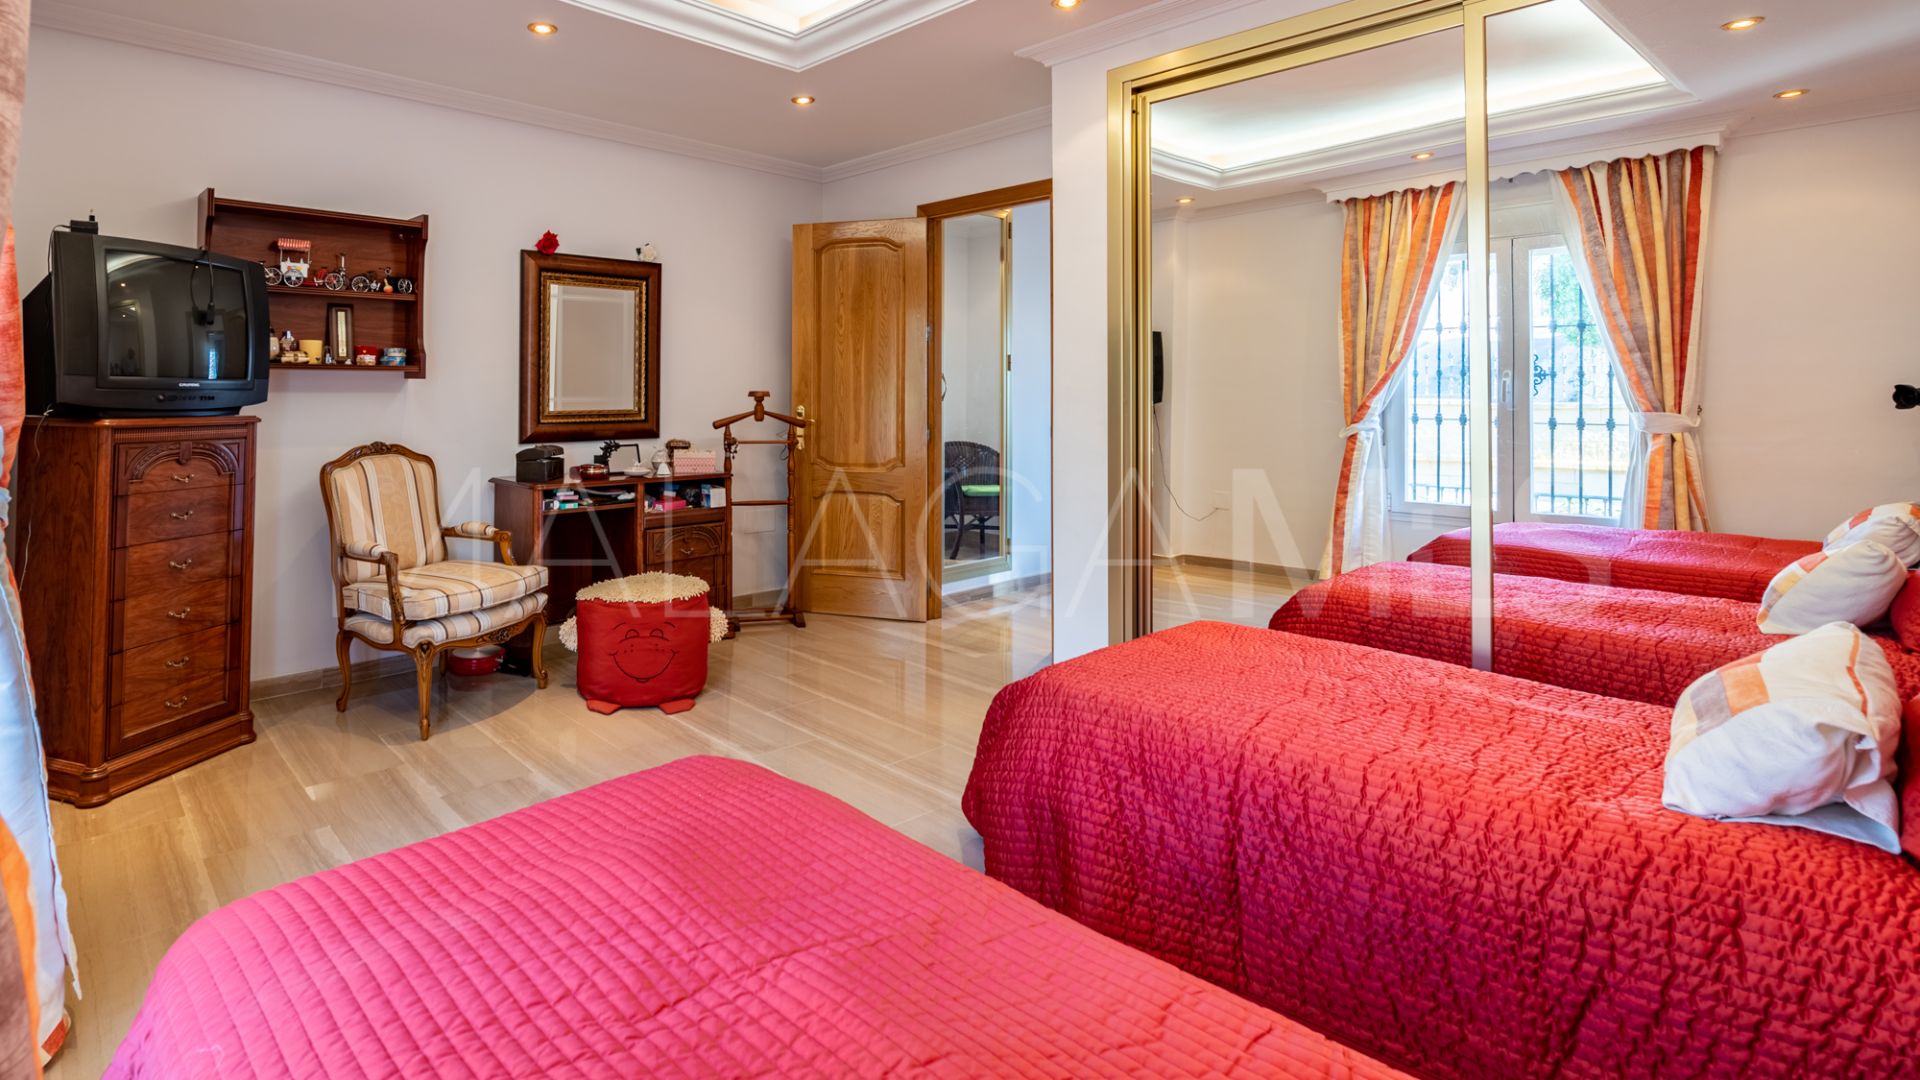 Villa for sale in Torrequebrada with 5 bedrooms